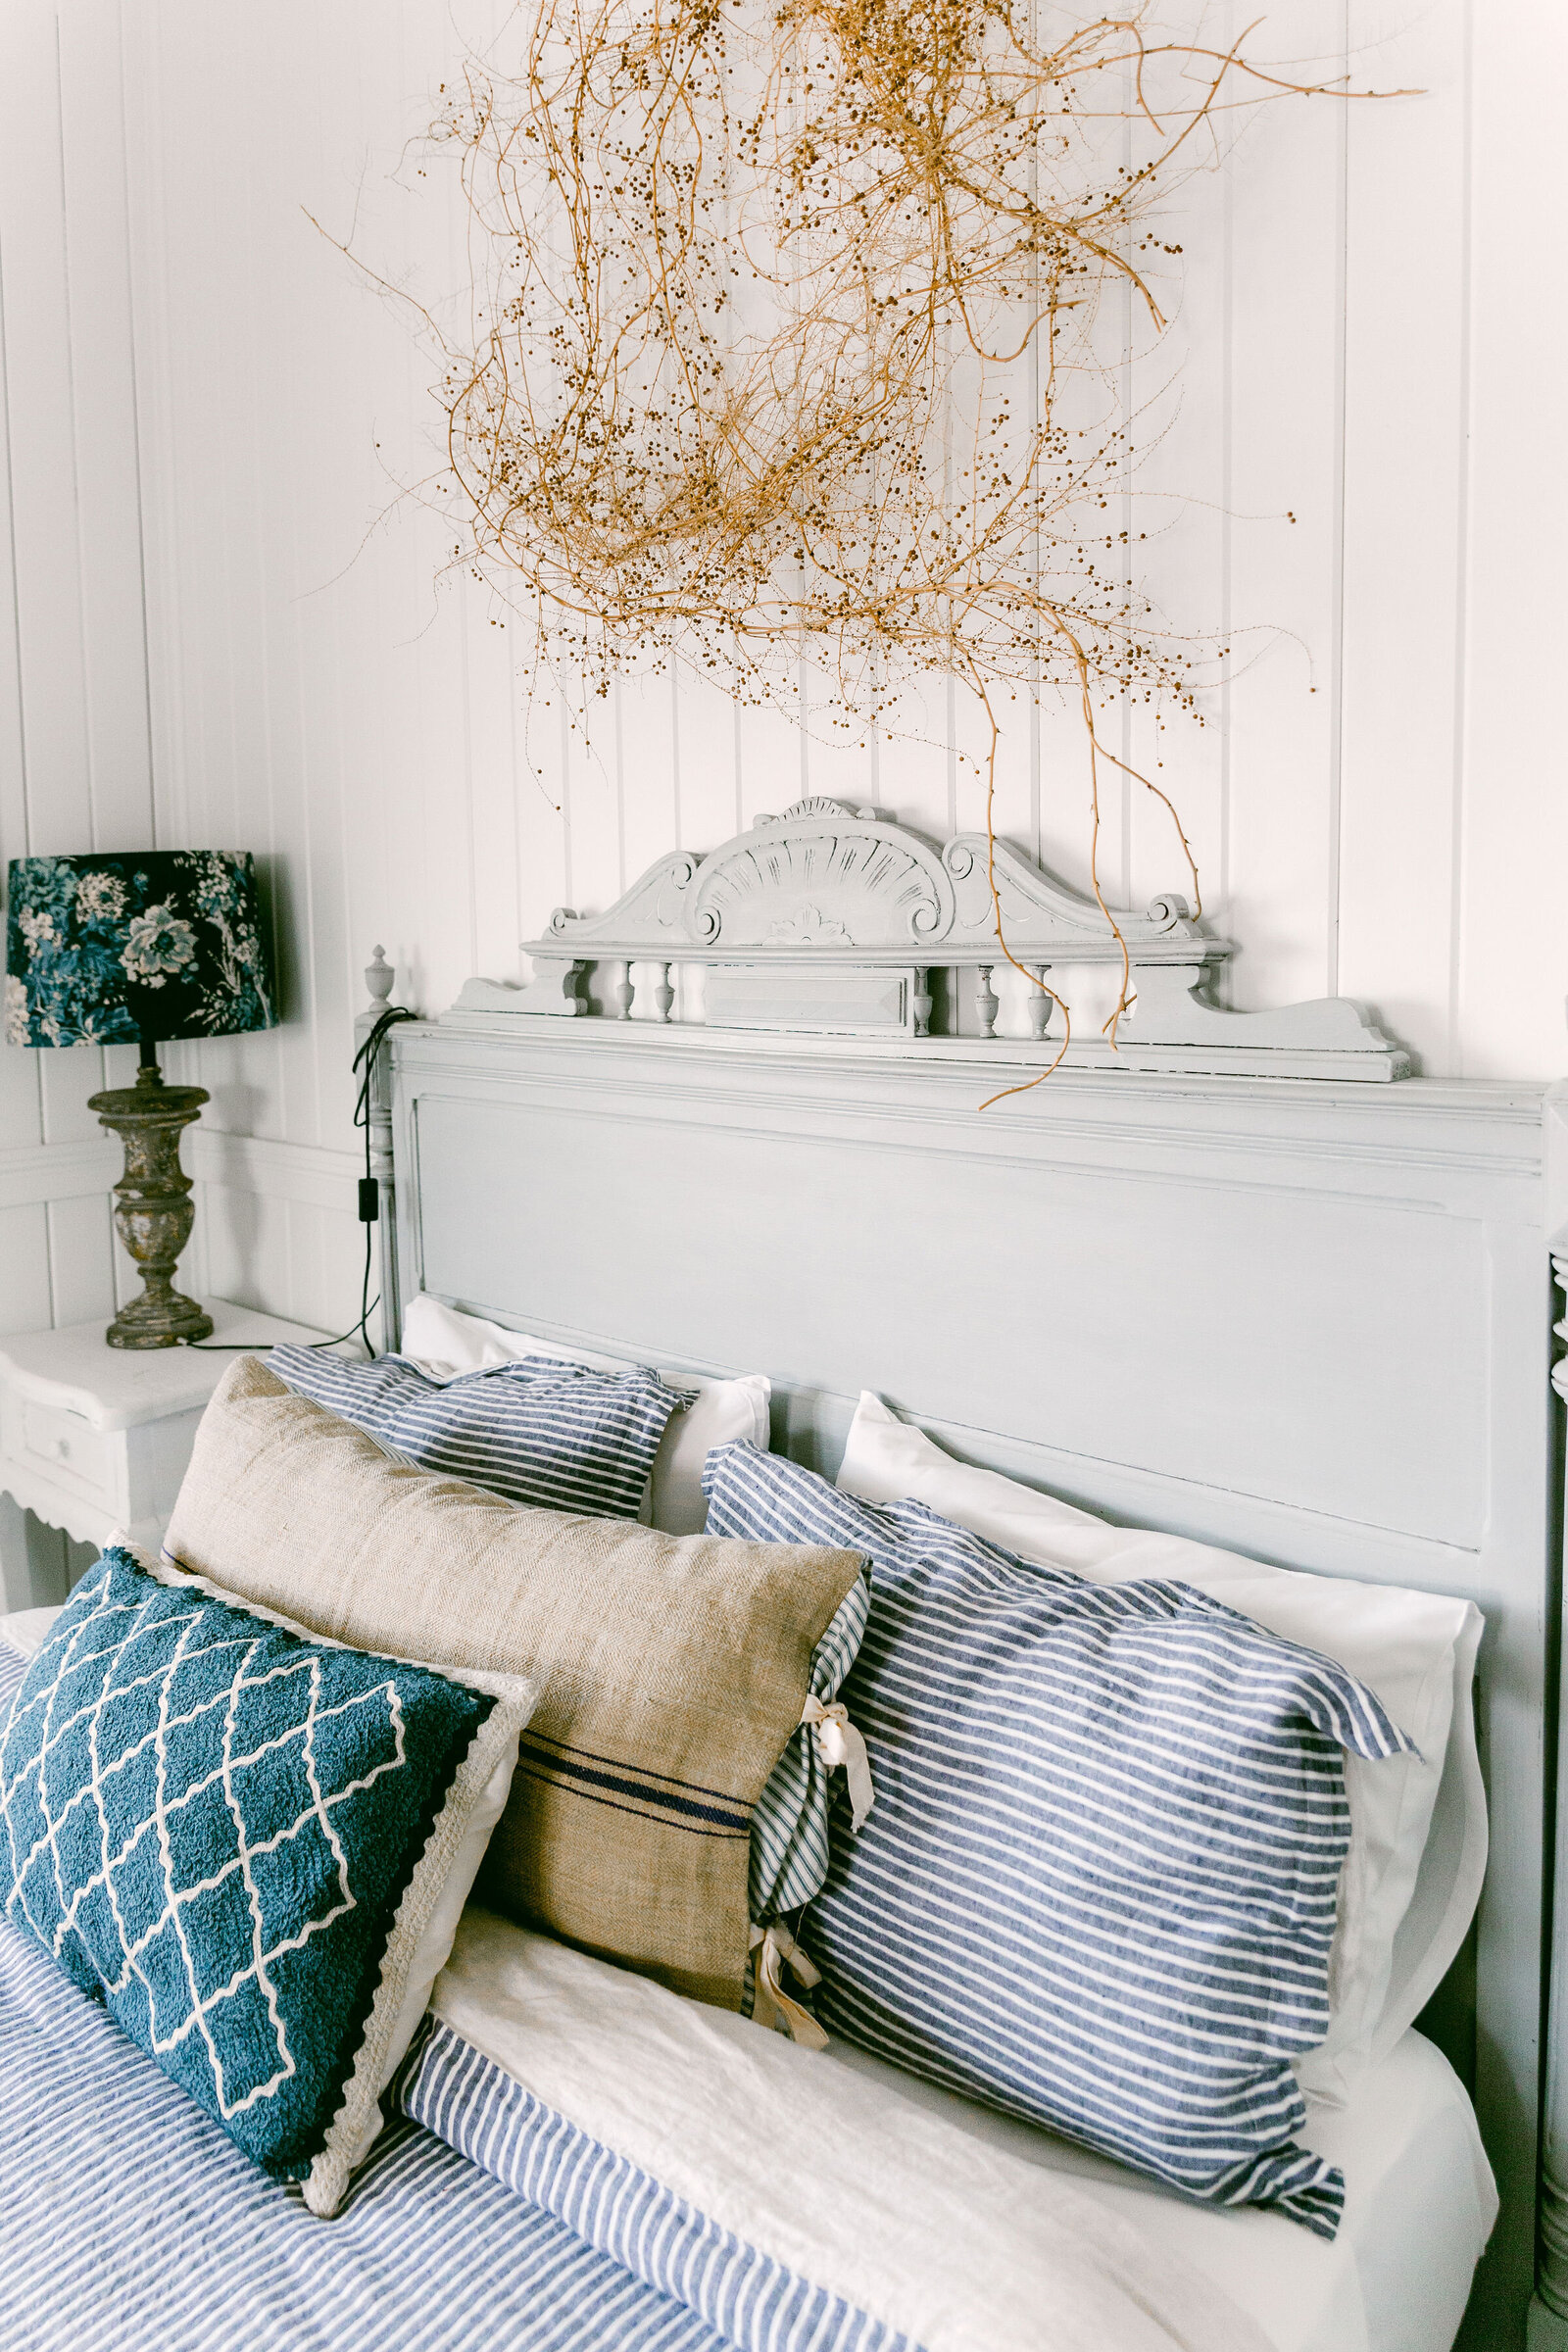 Vintage rustic interior design airbnb bed and breakfast photographer Chelsea Loren in San Diego